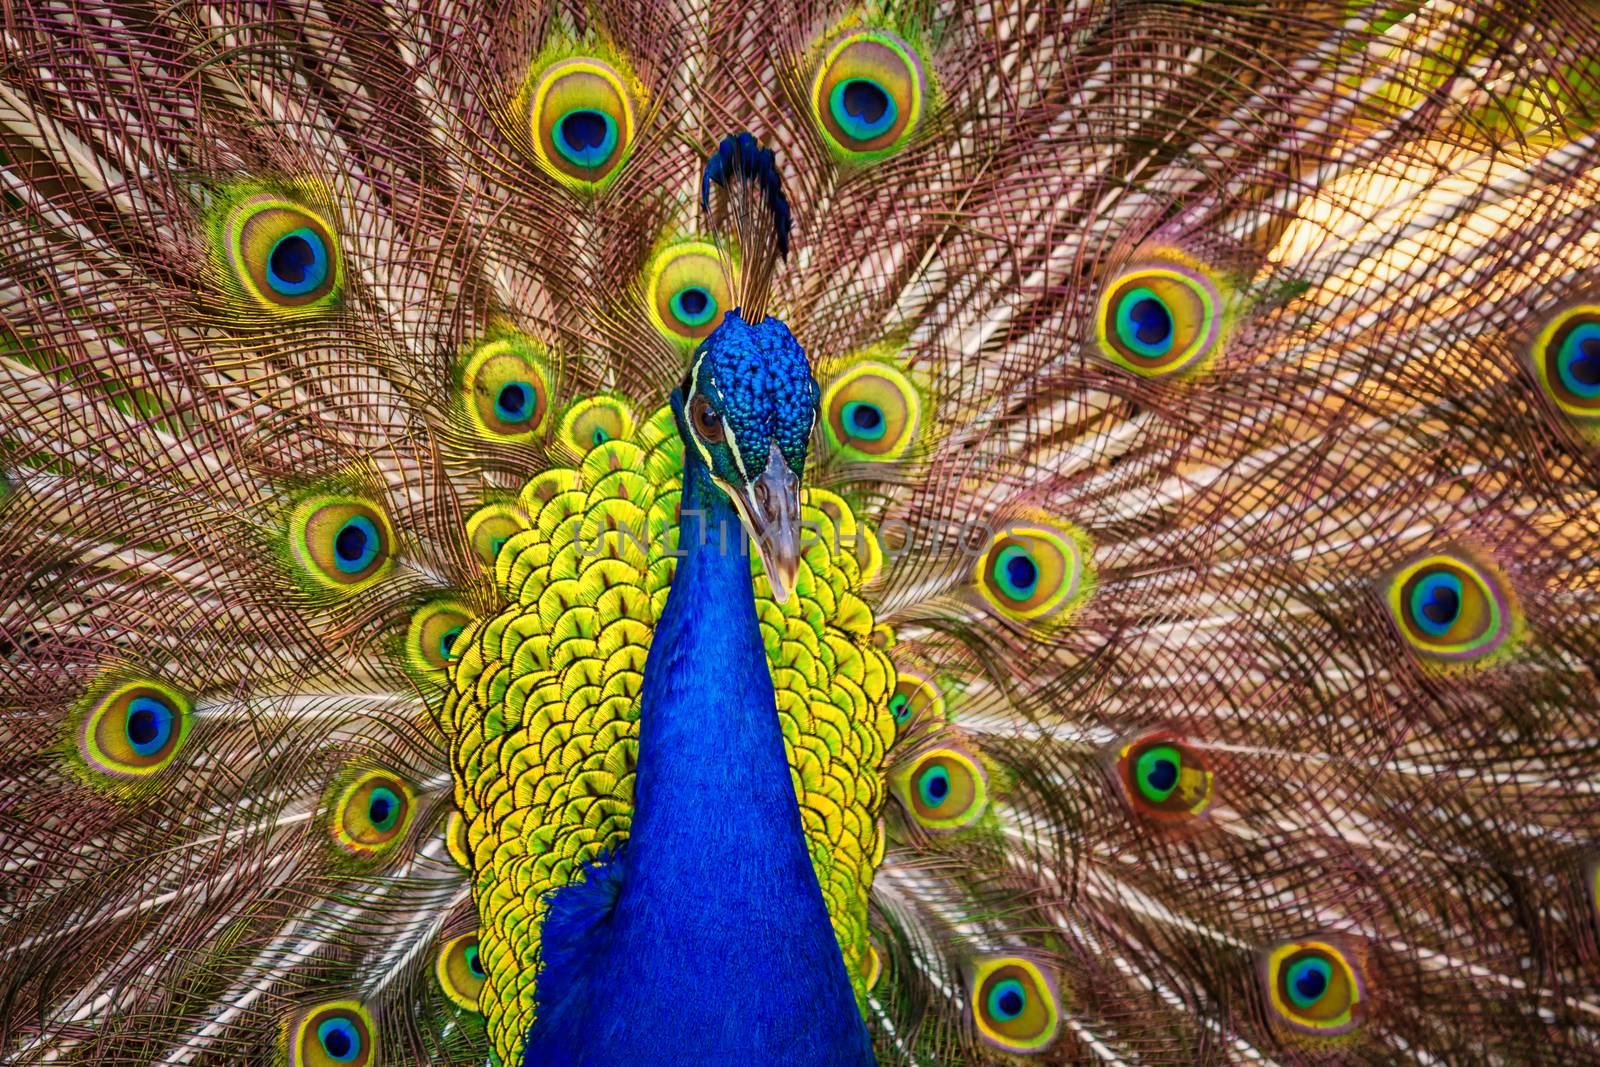 A Male Peacock Showing its Feathers, Kauaii, Hawaii. Color Image.